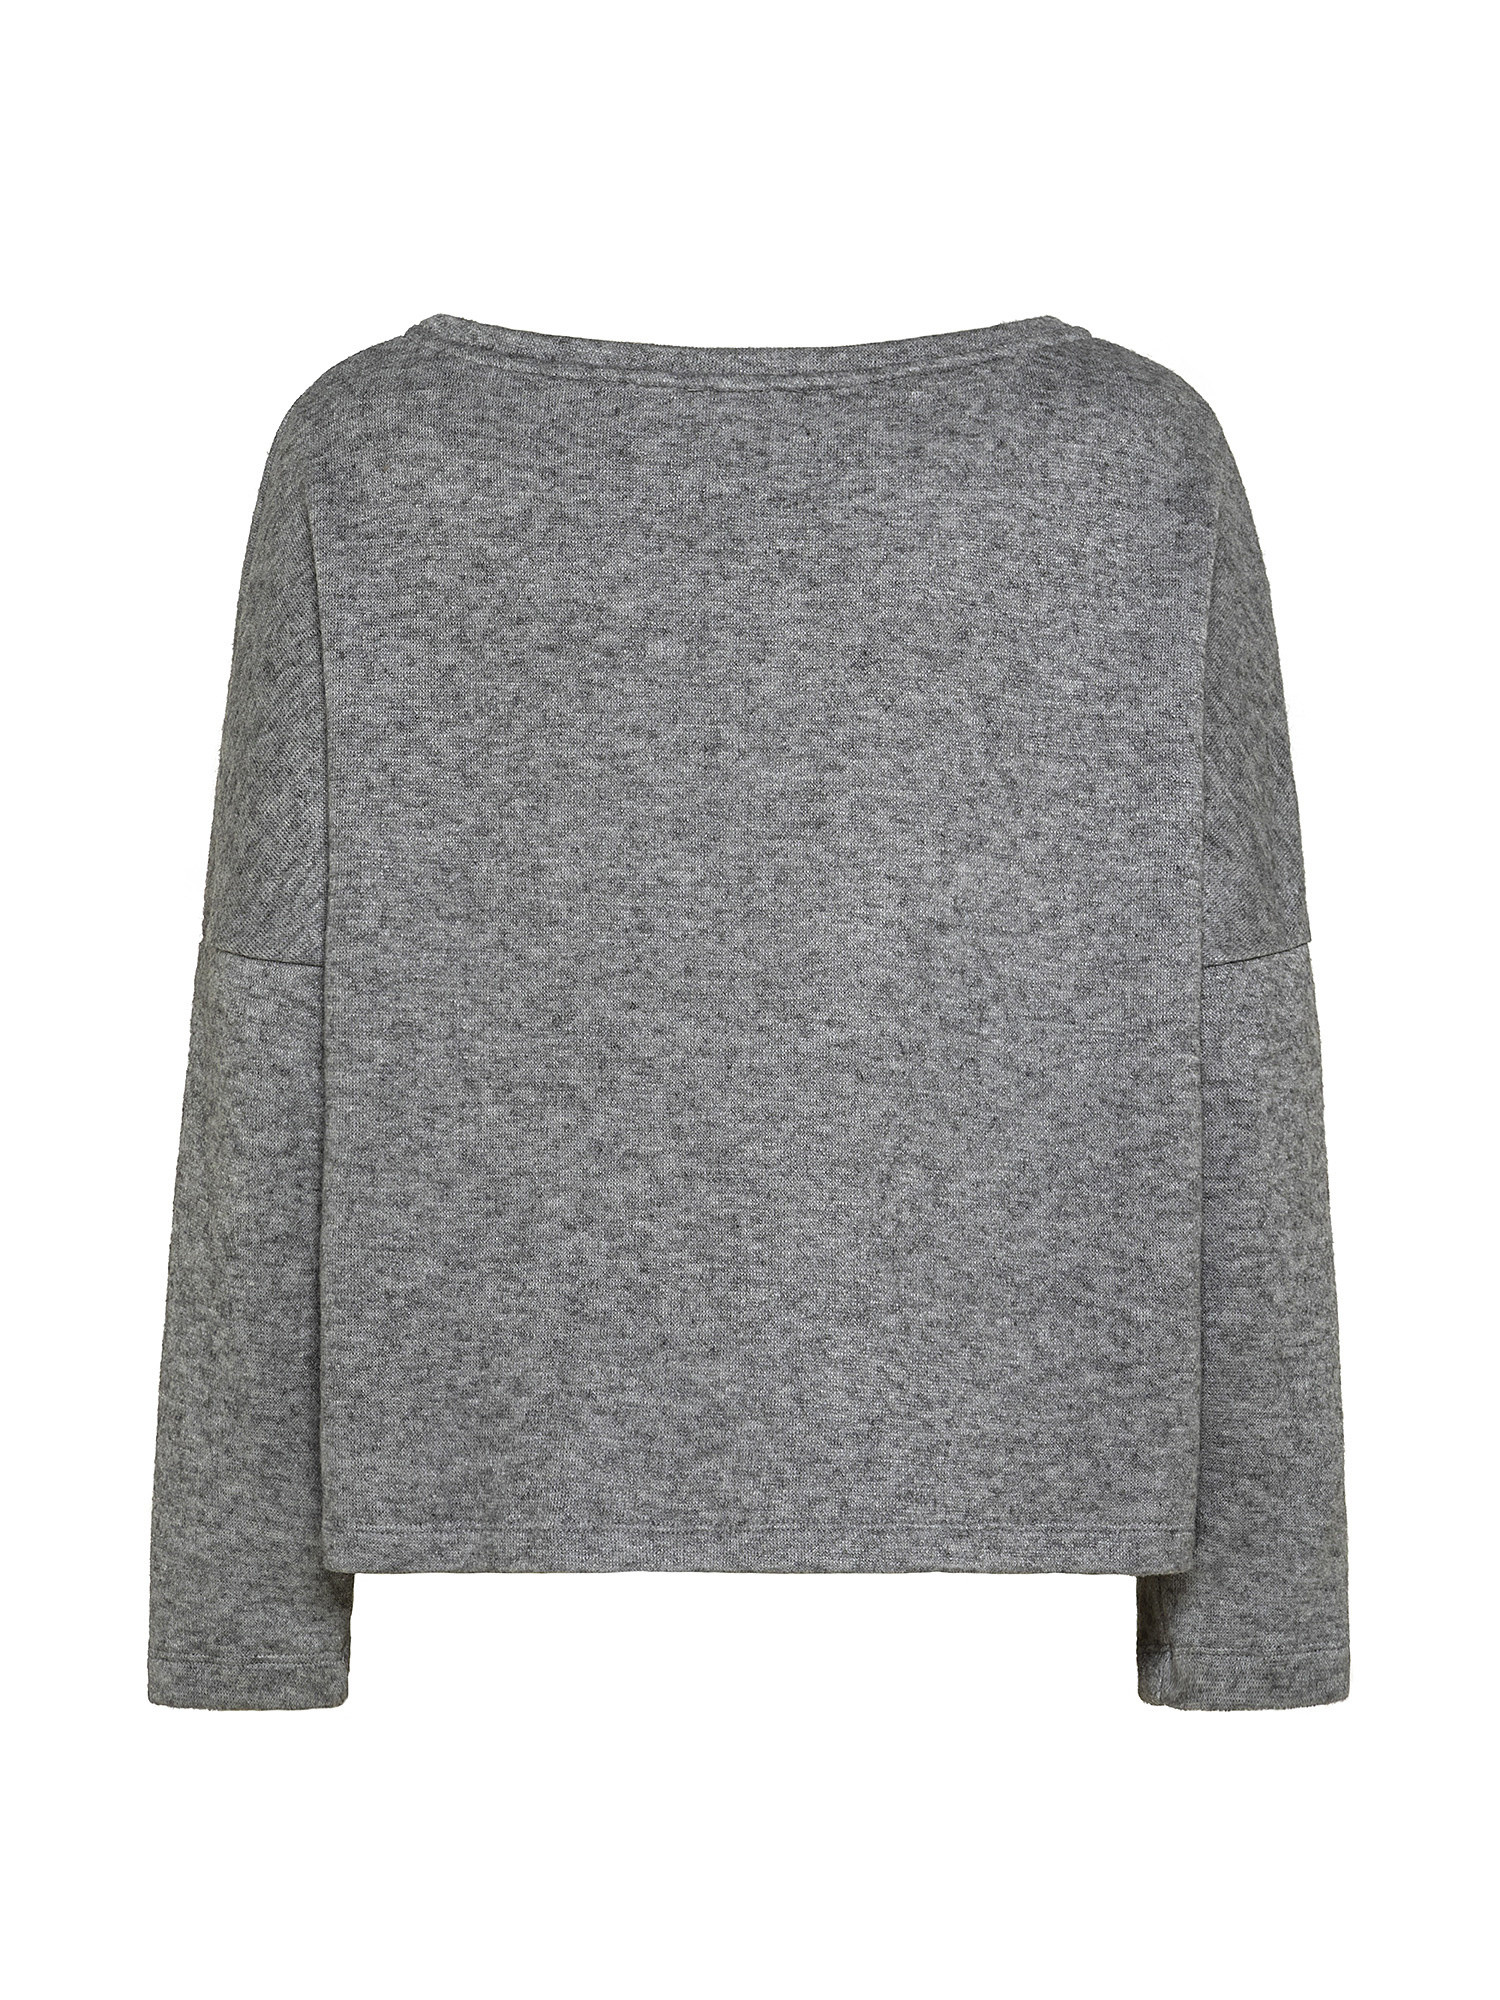 Oversized jersey sweater, Light Grey Melange, large image number 1